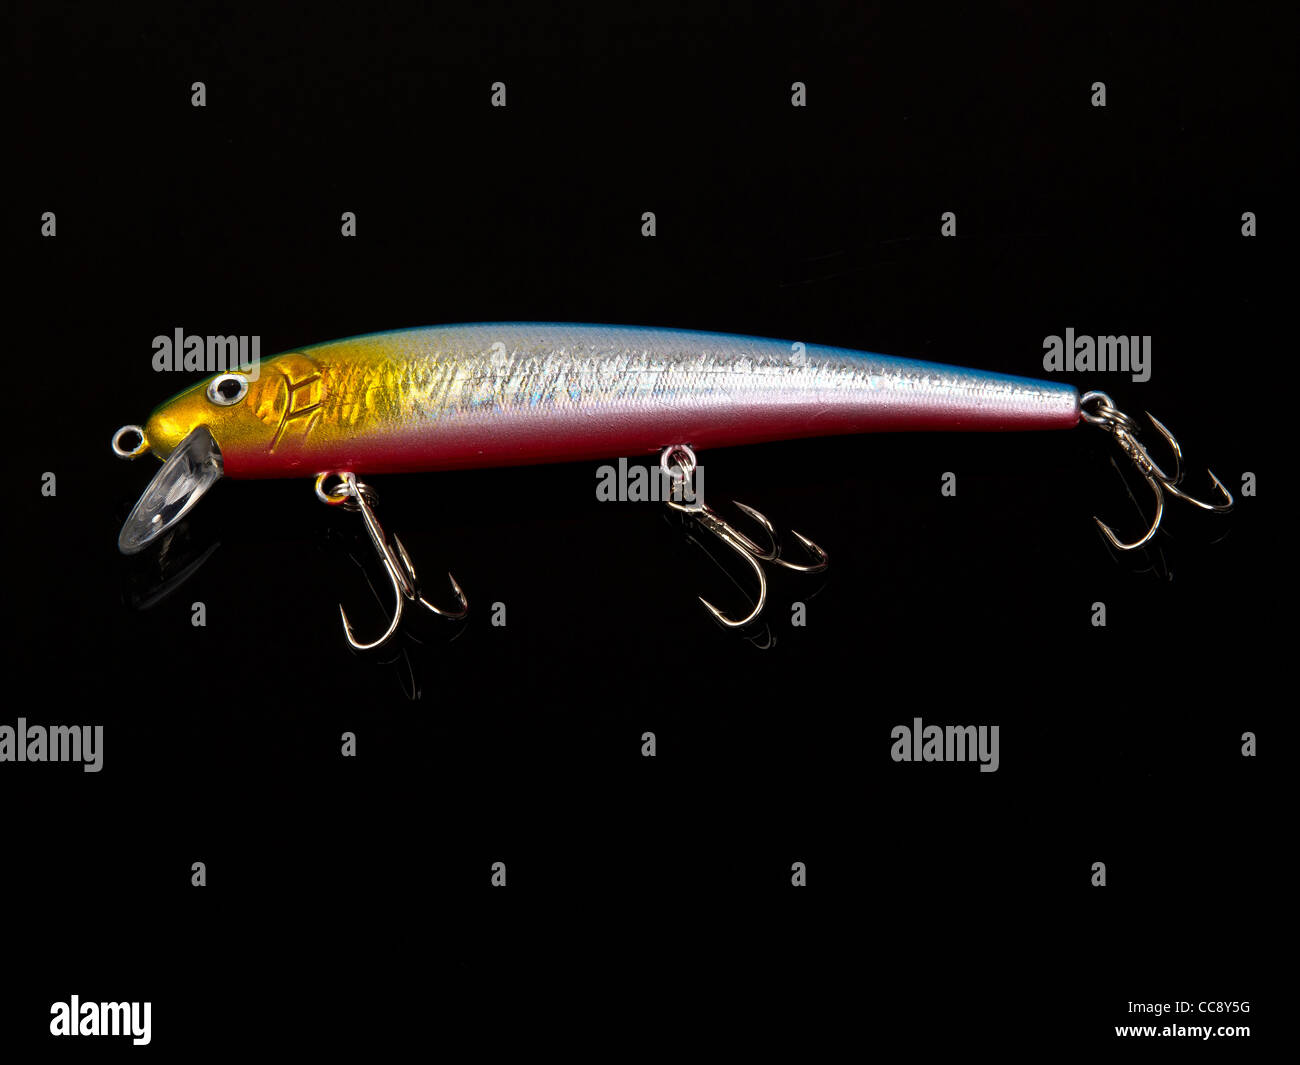 metal pendant on spinning fishing-rod bait Stock Photo - Alamy